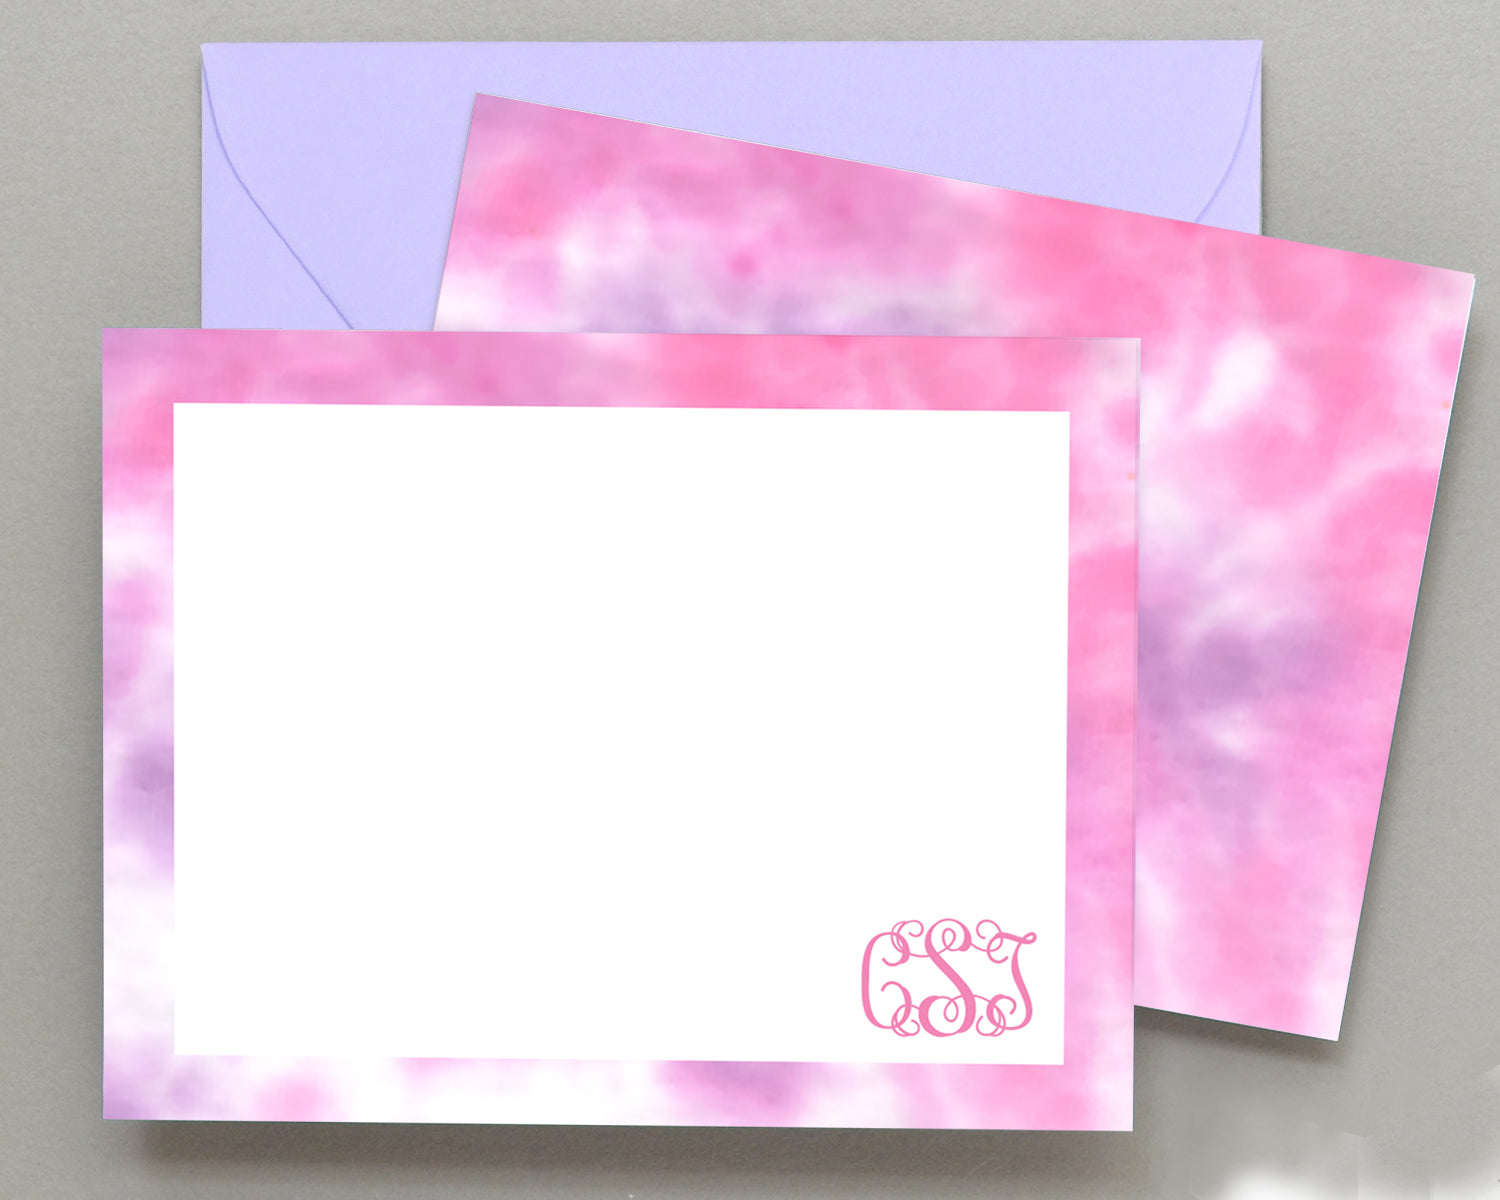 Elegant Monogrammed Note Cards with Envelopes - Augusta Joy